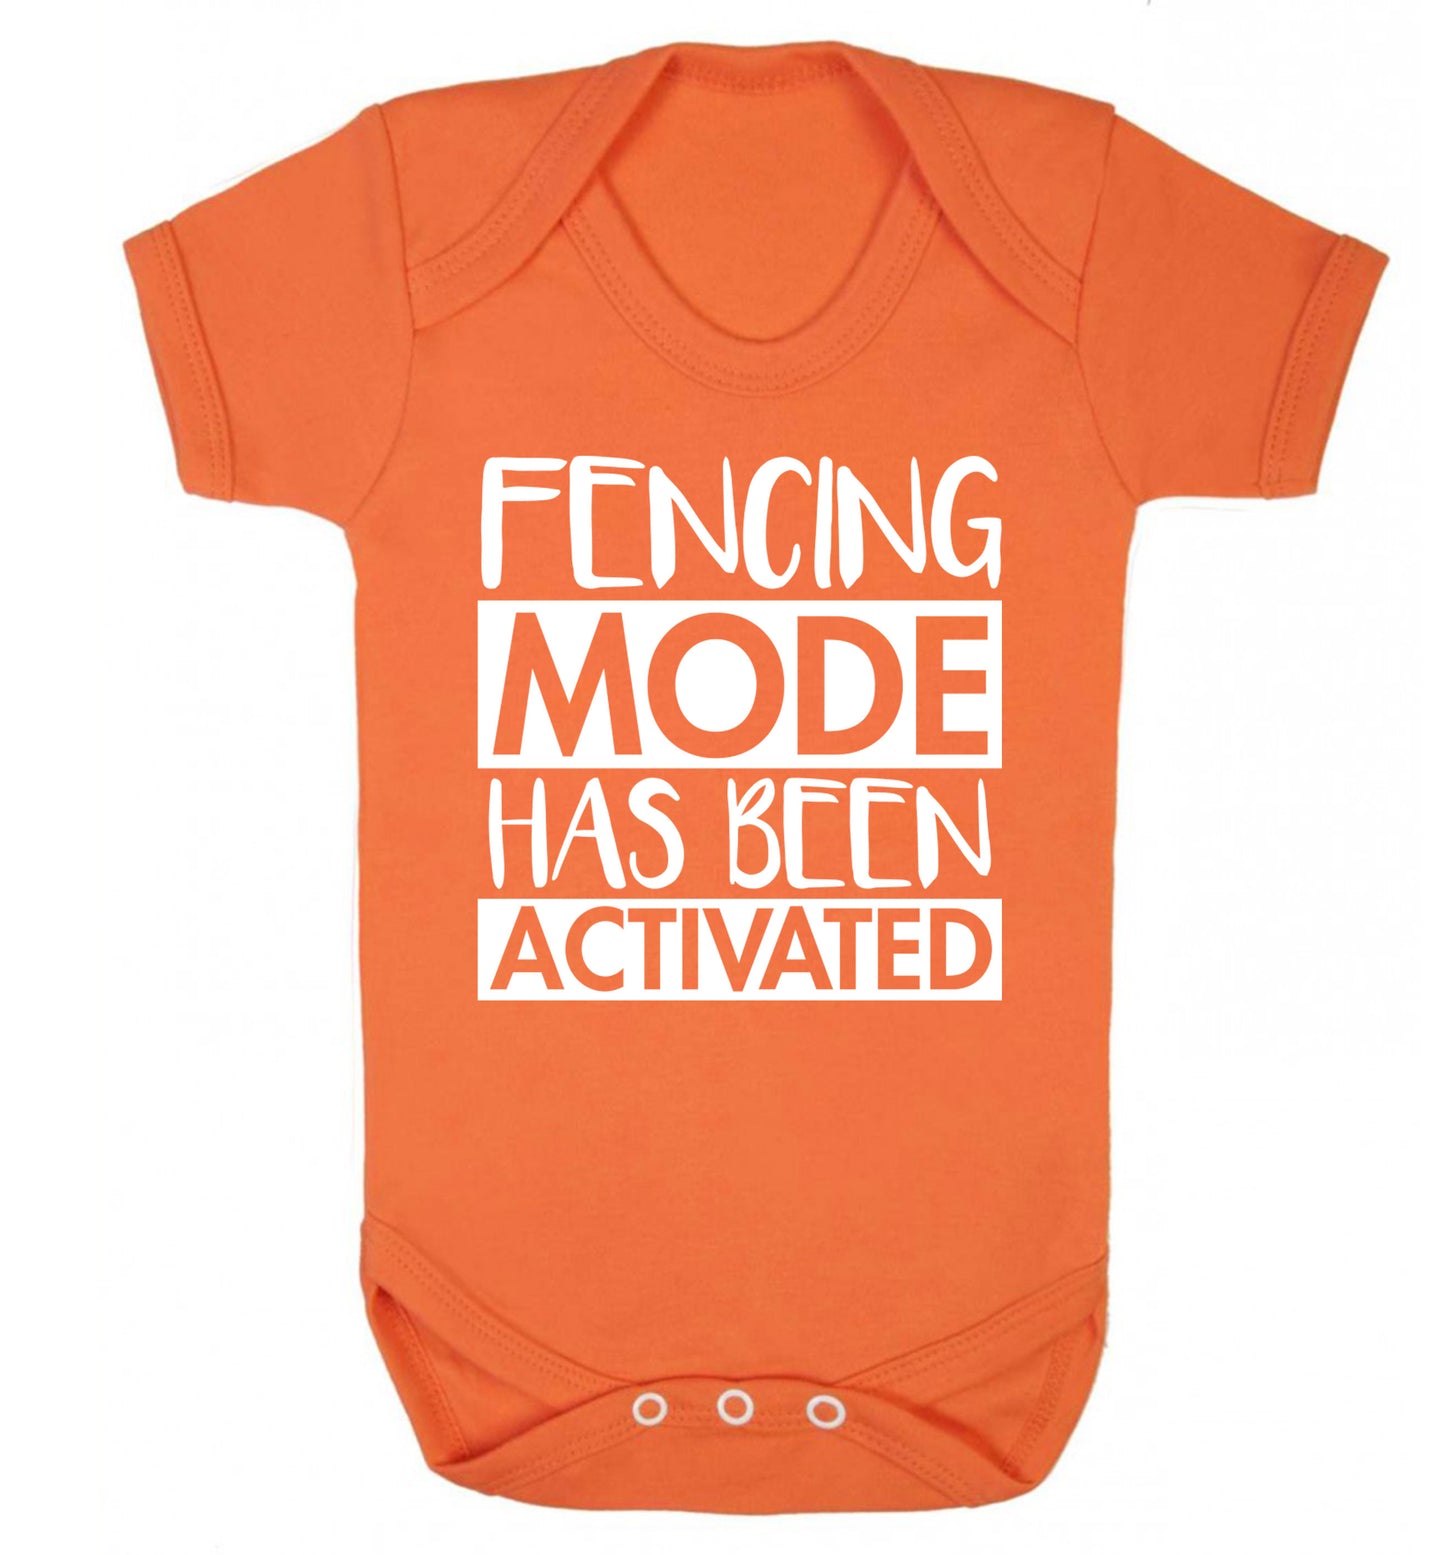 Fencing mode activated Baby Vest orange 18-24 months